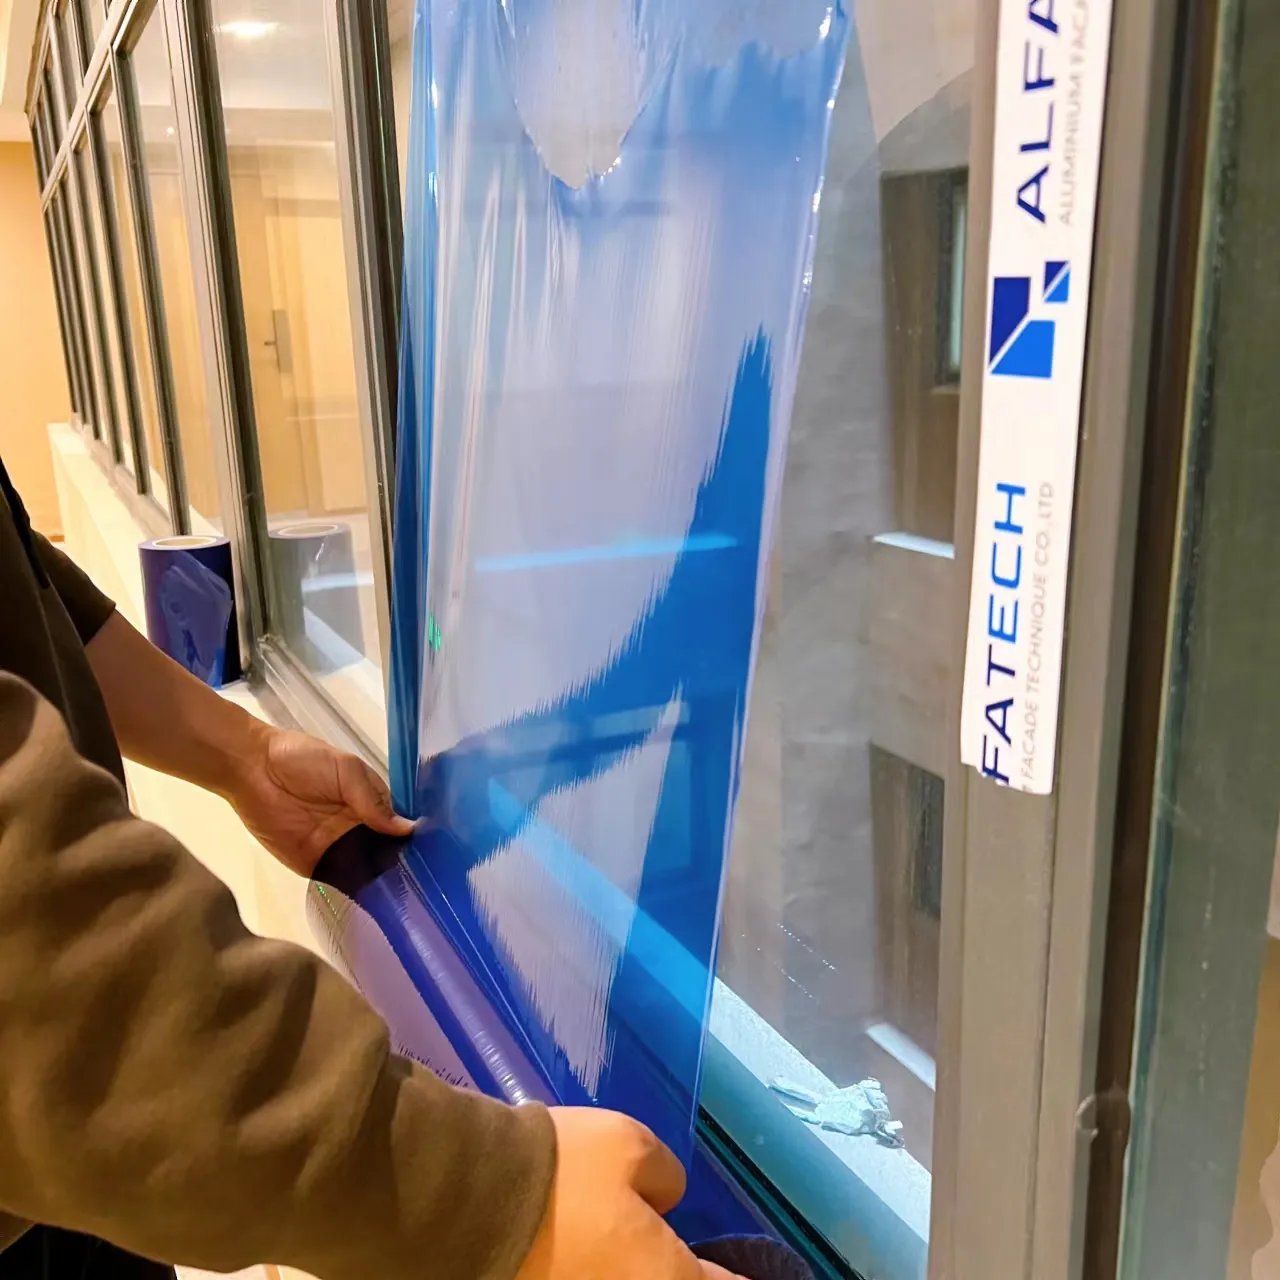 Película de protección de superficie antiarañazos temporal transparente azul transparente para ventanas y muros cortina de vidrio